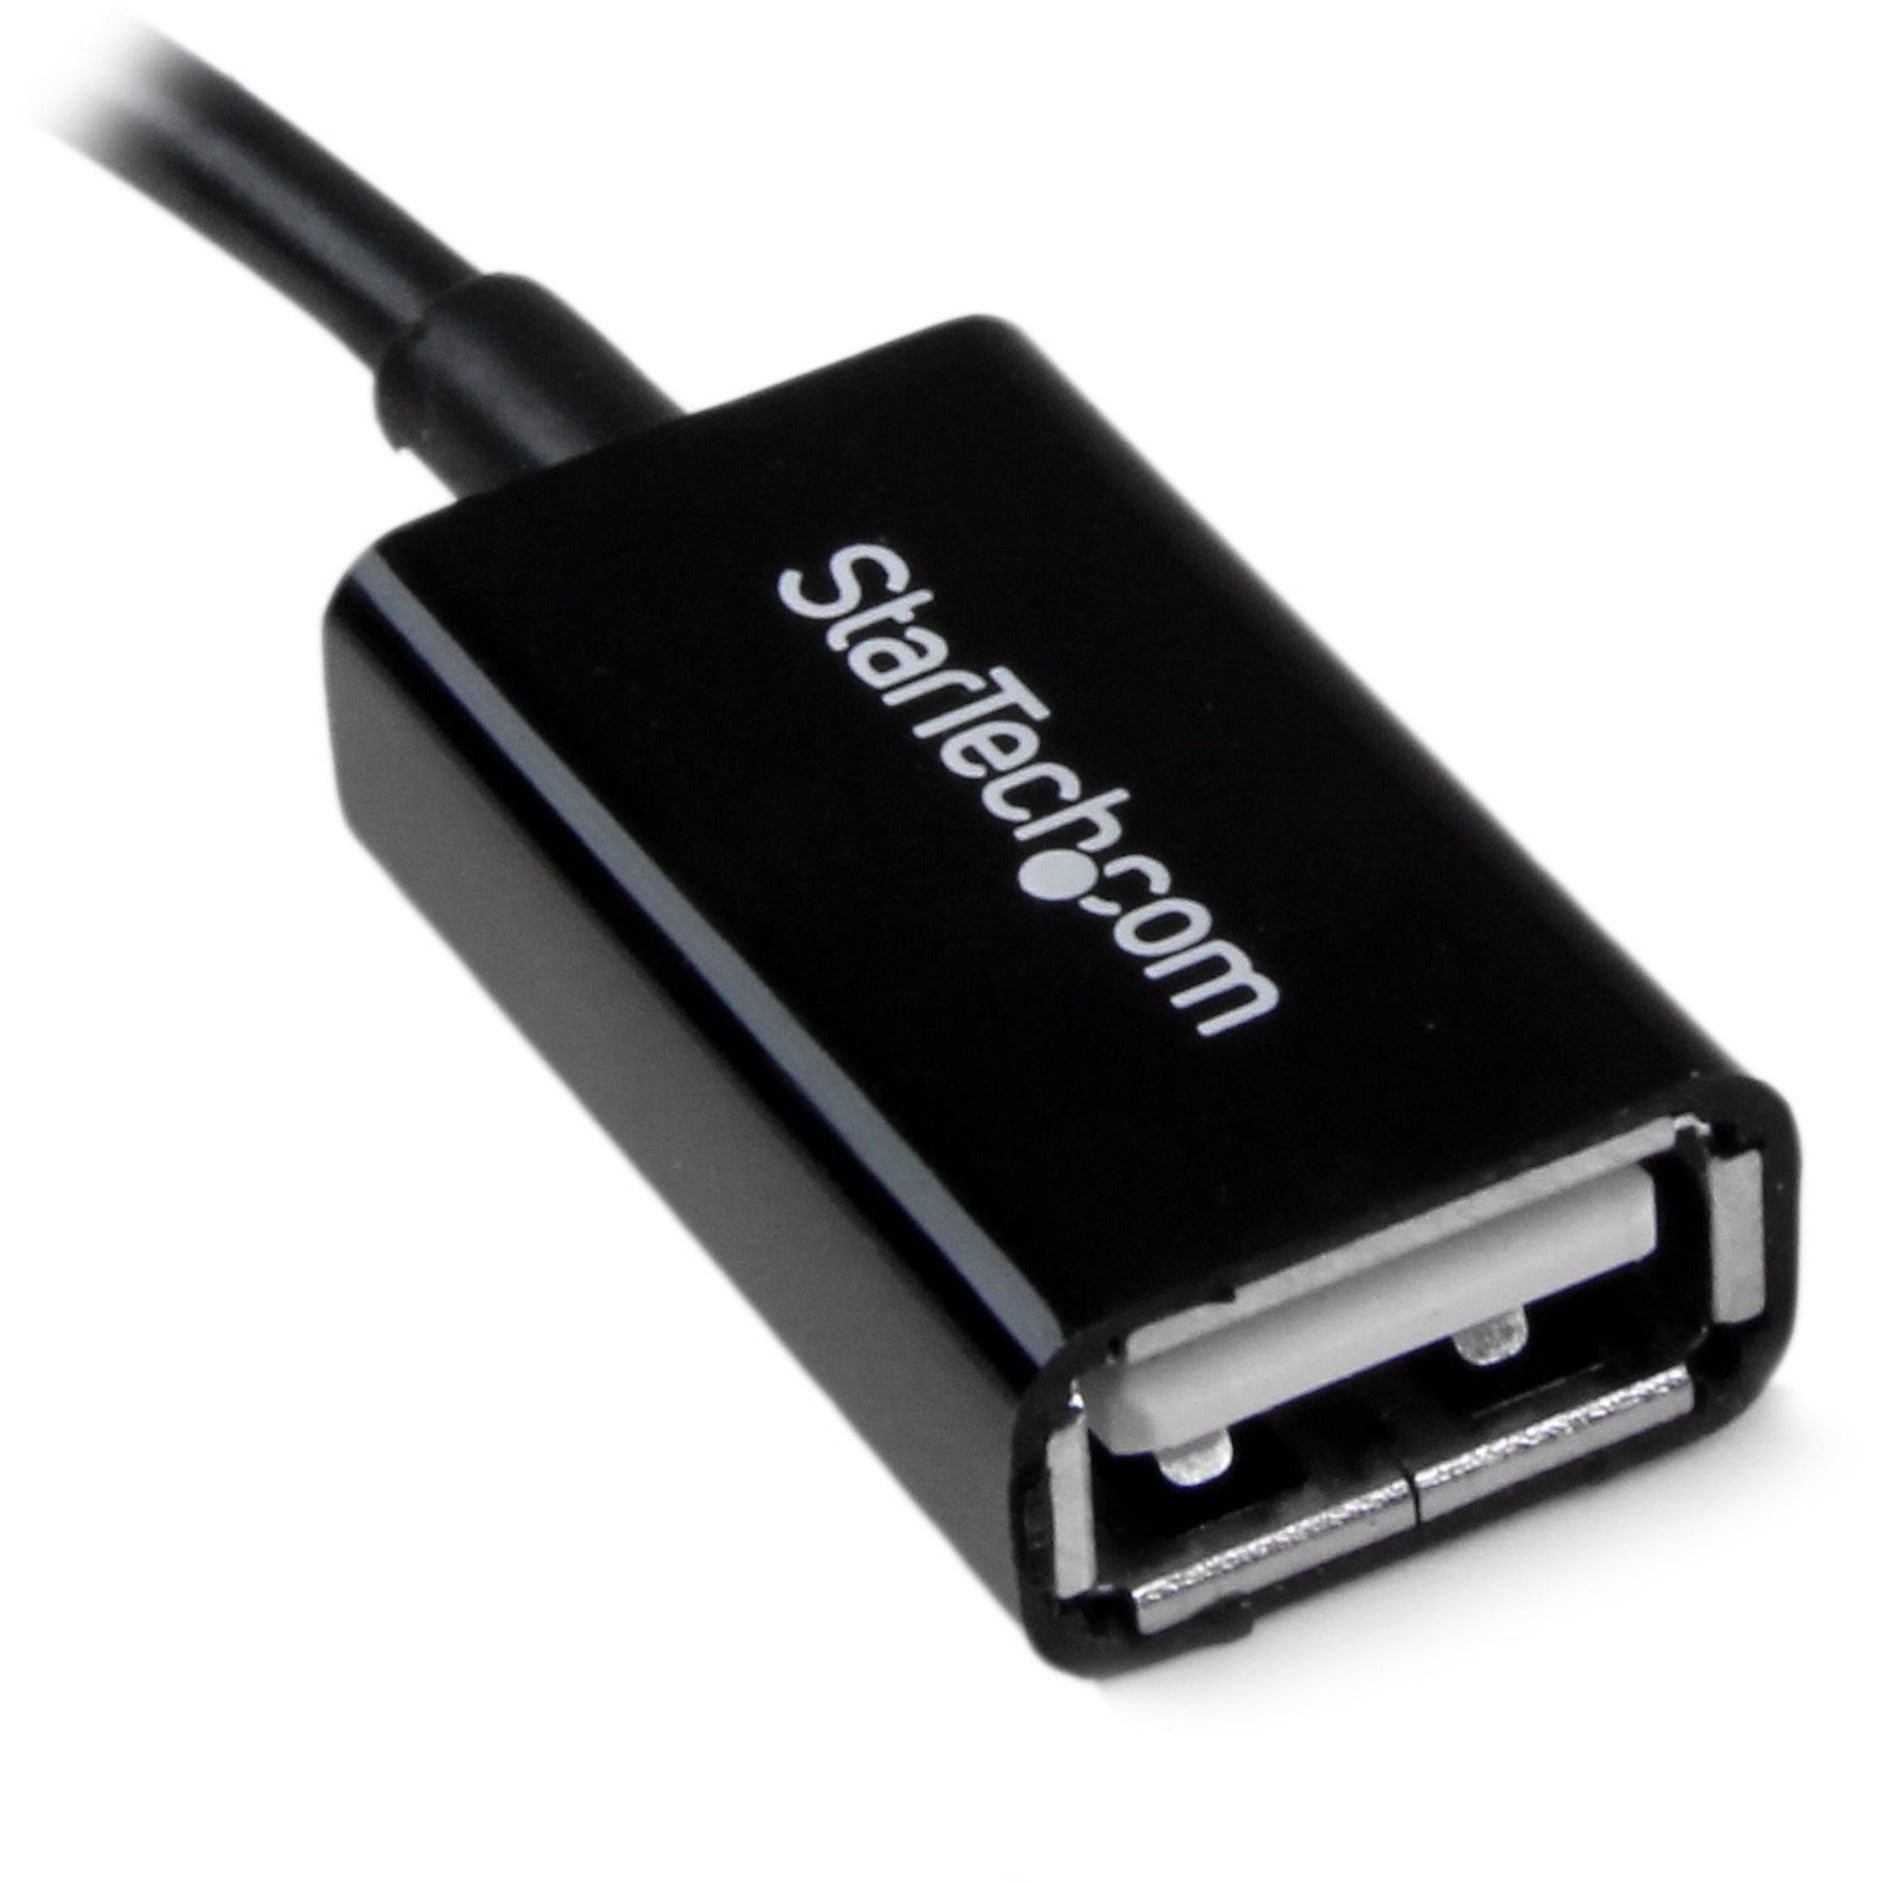 StarTech.com UUSBOTG 5in Micro USB to USB OTG Host Adapter M/F, Data Transfer Adapter